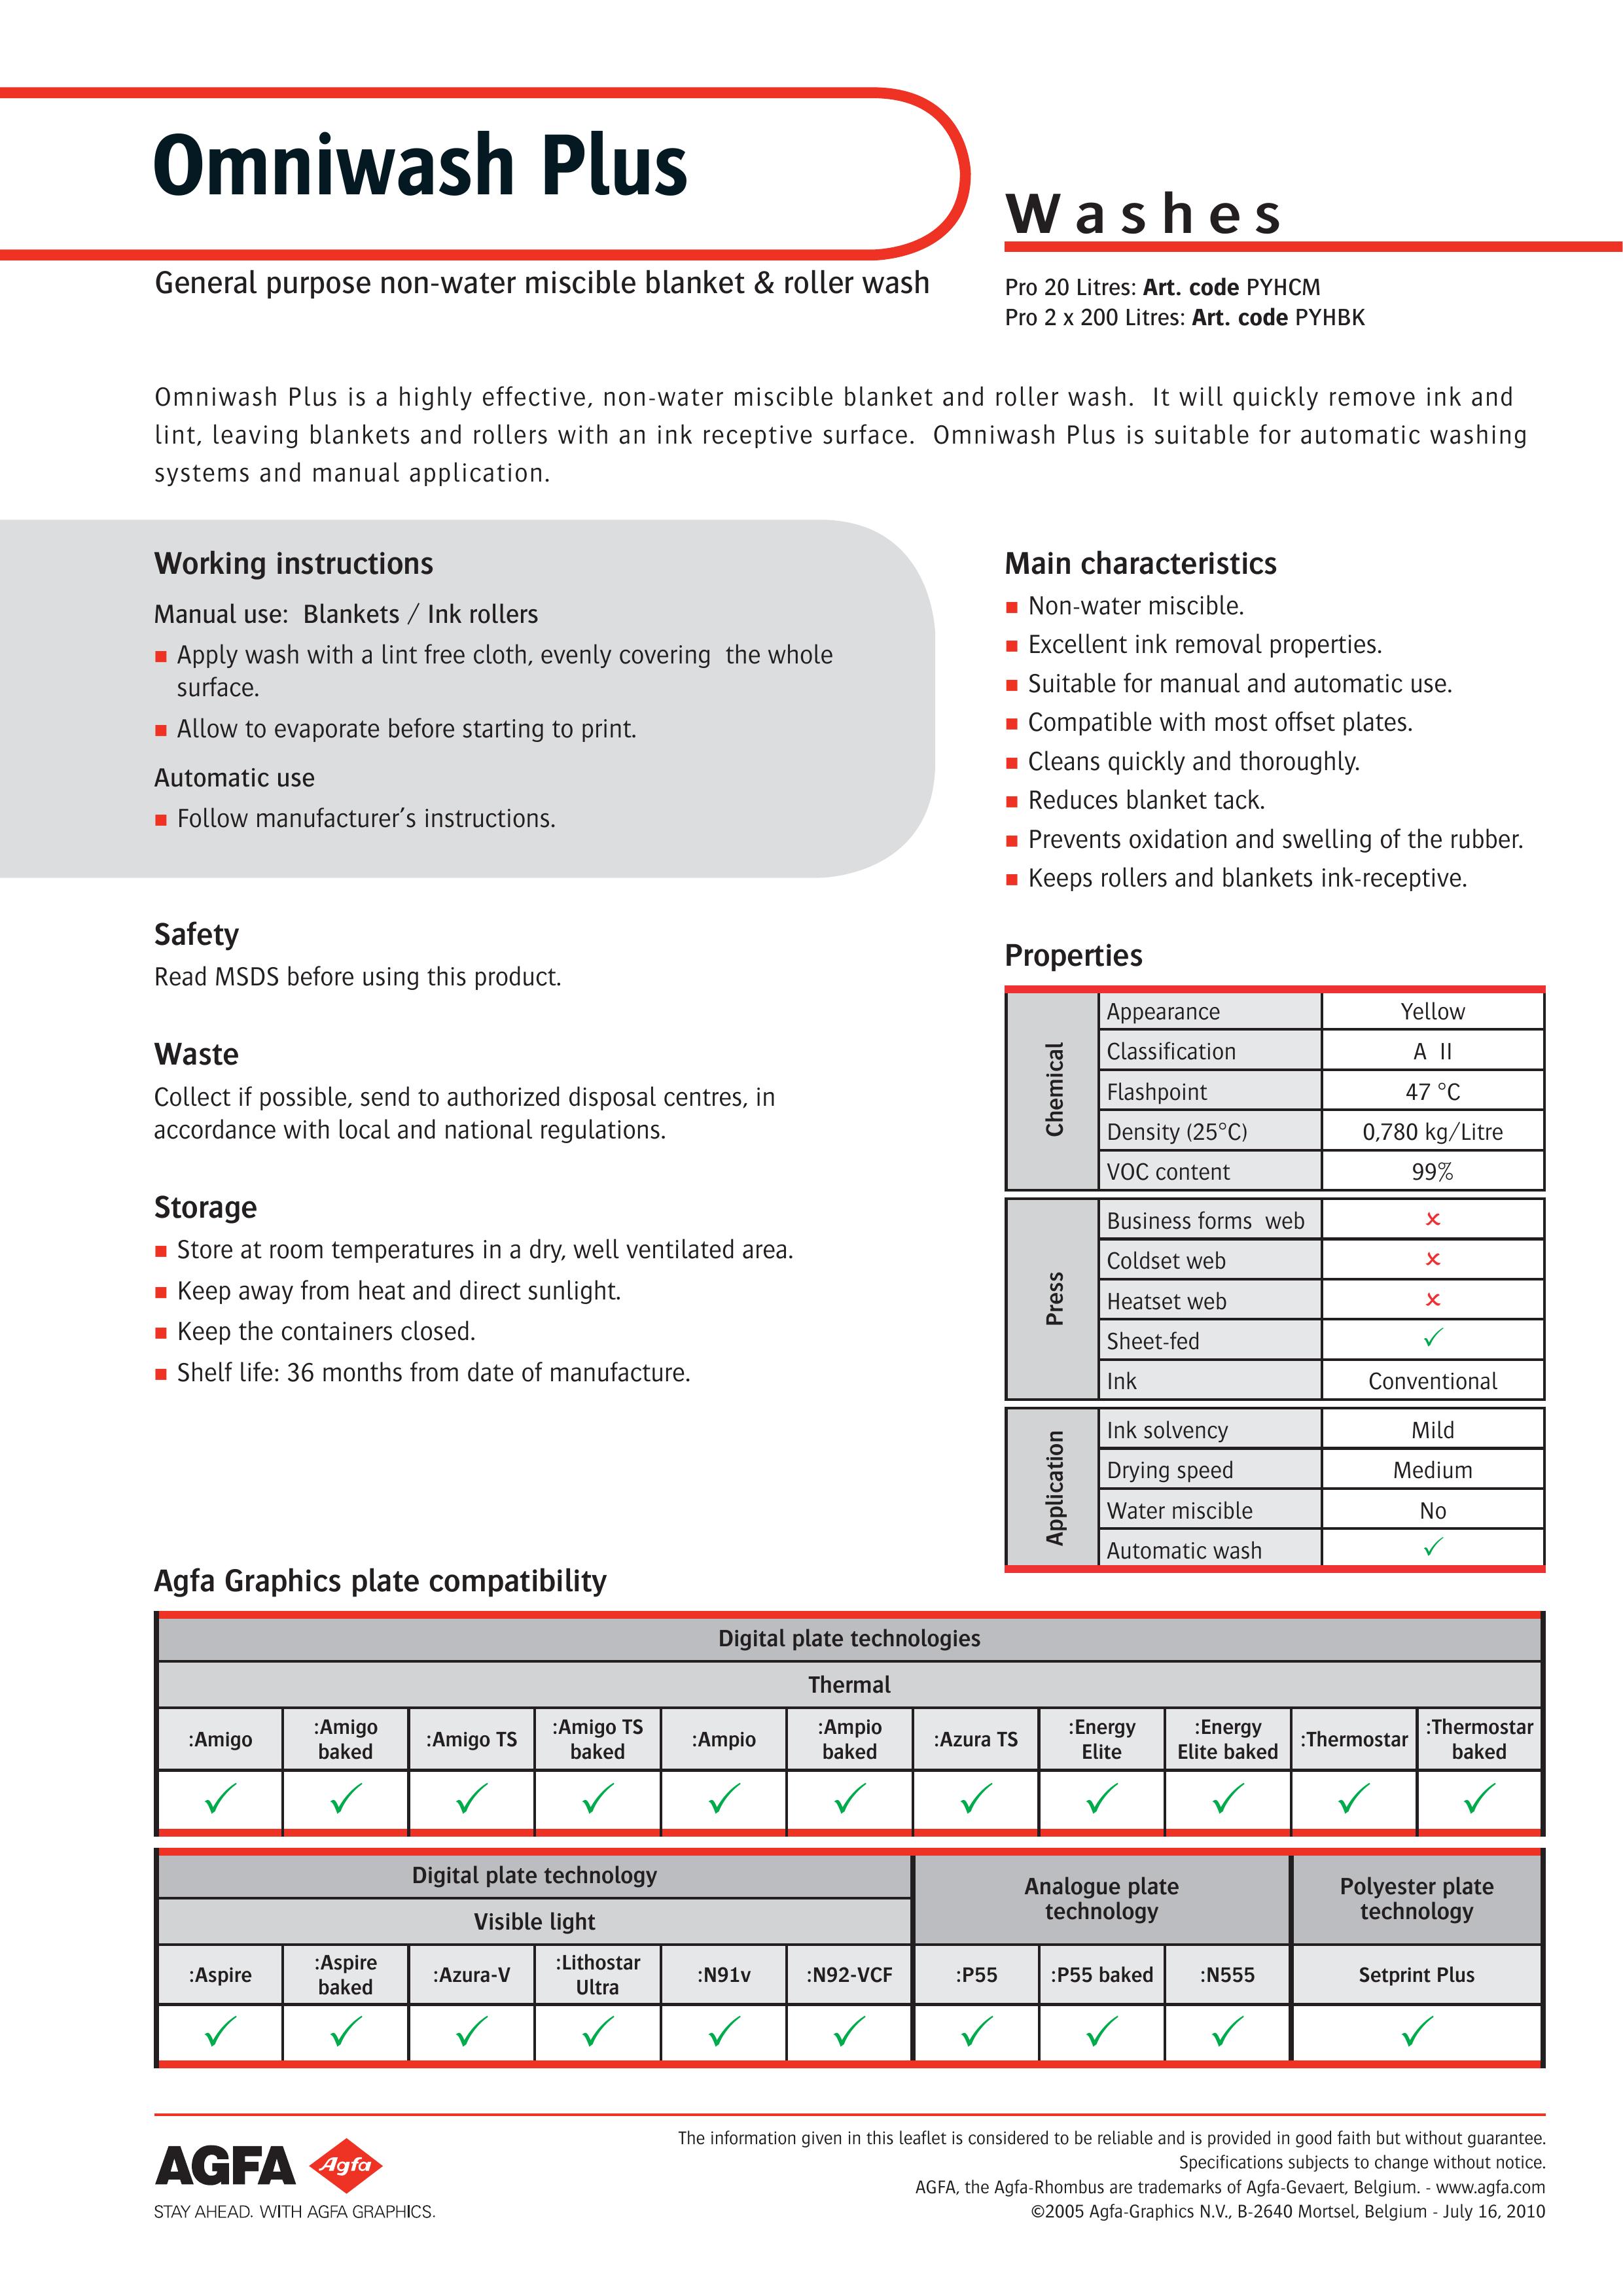 AGFA PYHCK Washer User Manual (Page 1)